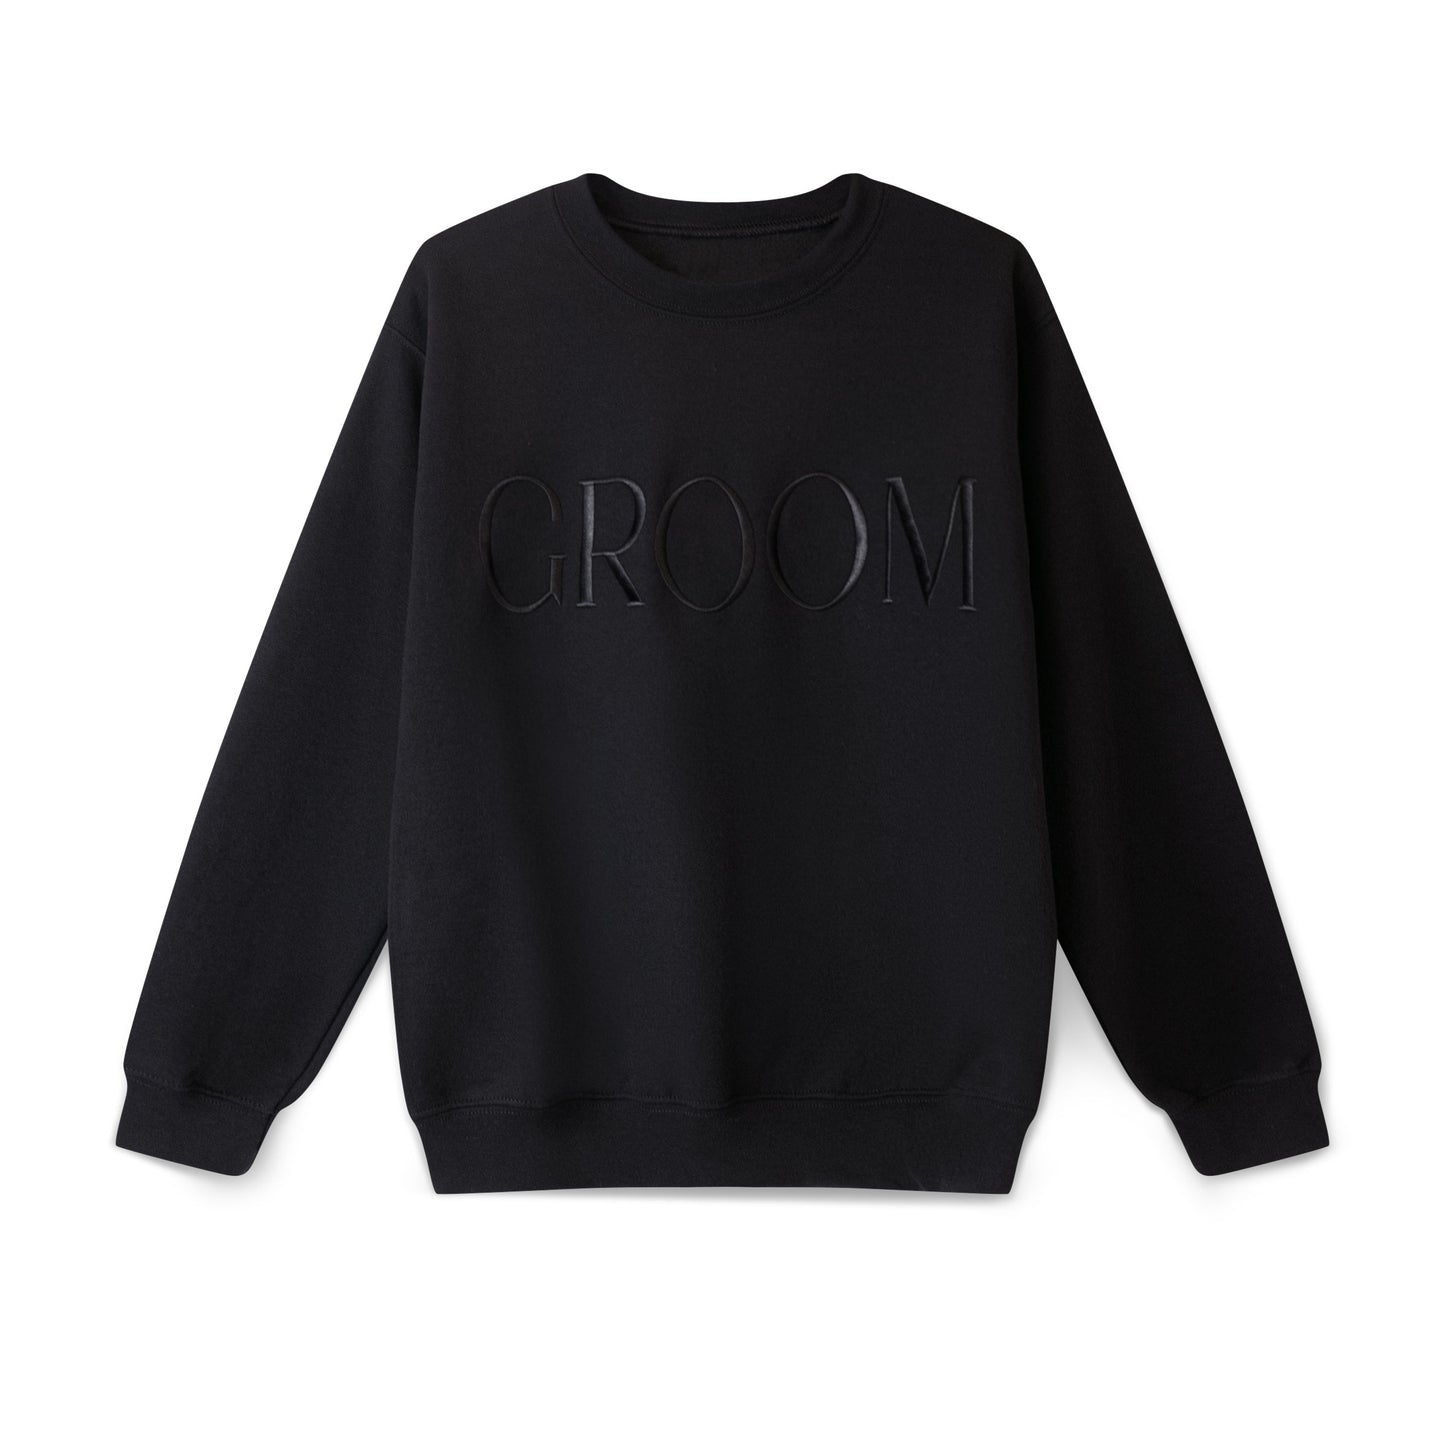 Black "GROOM" sweatshirt made of 100% cotton.